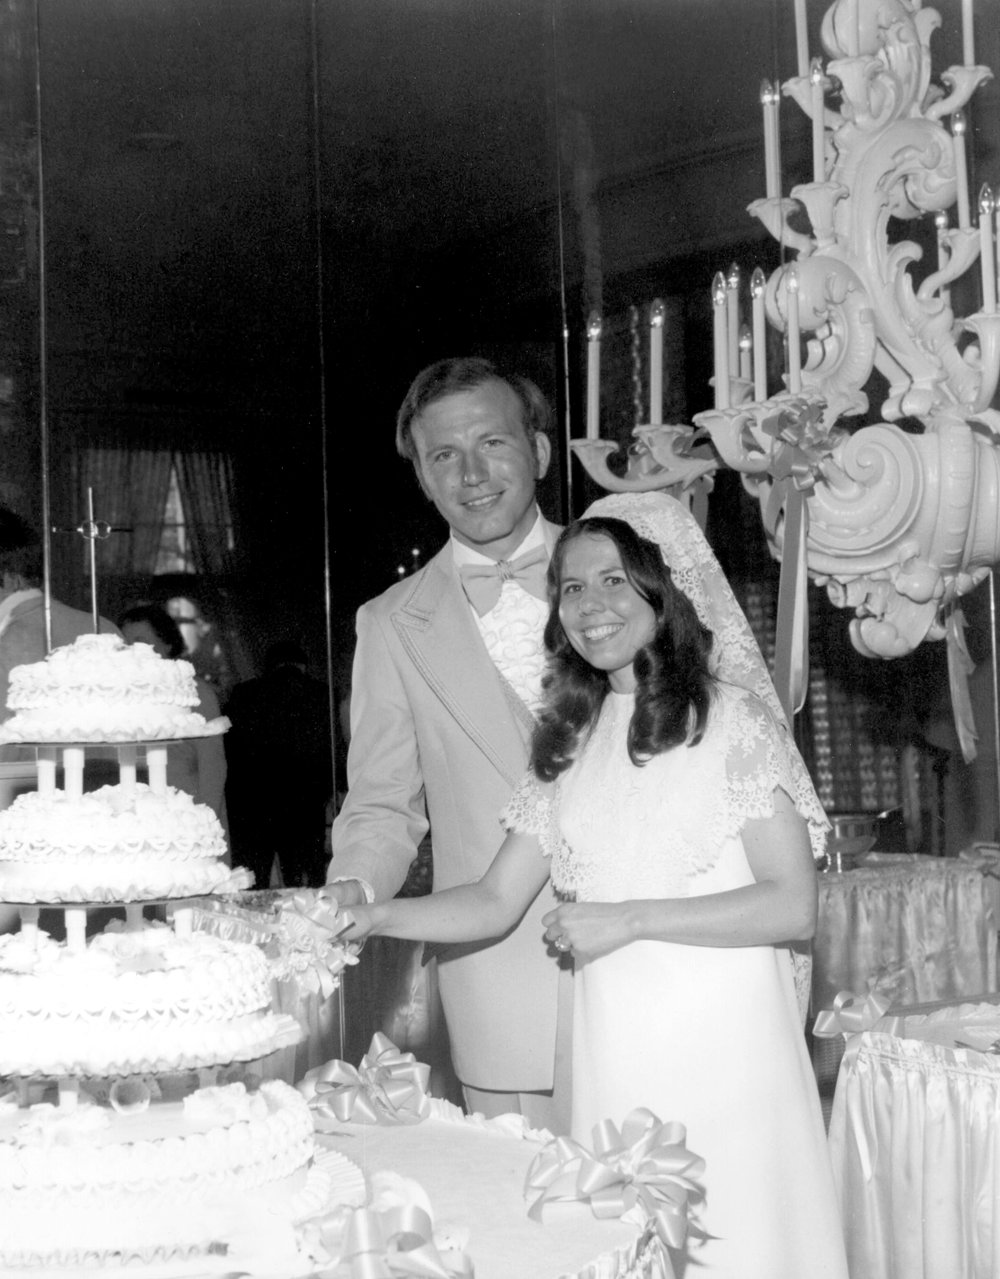 1975 - Steve & Judy Wedding Cake - edited.jpg